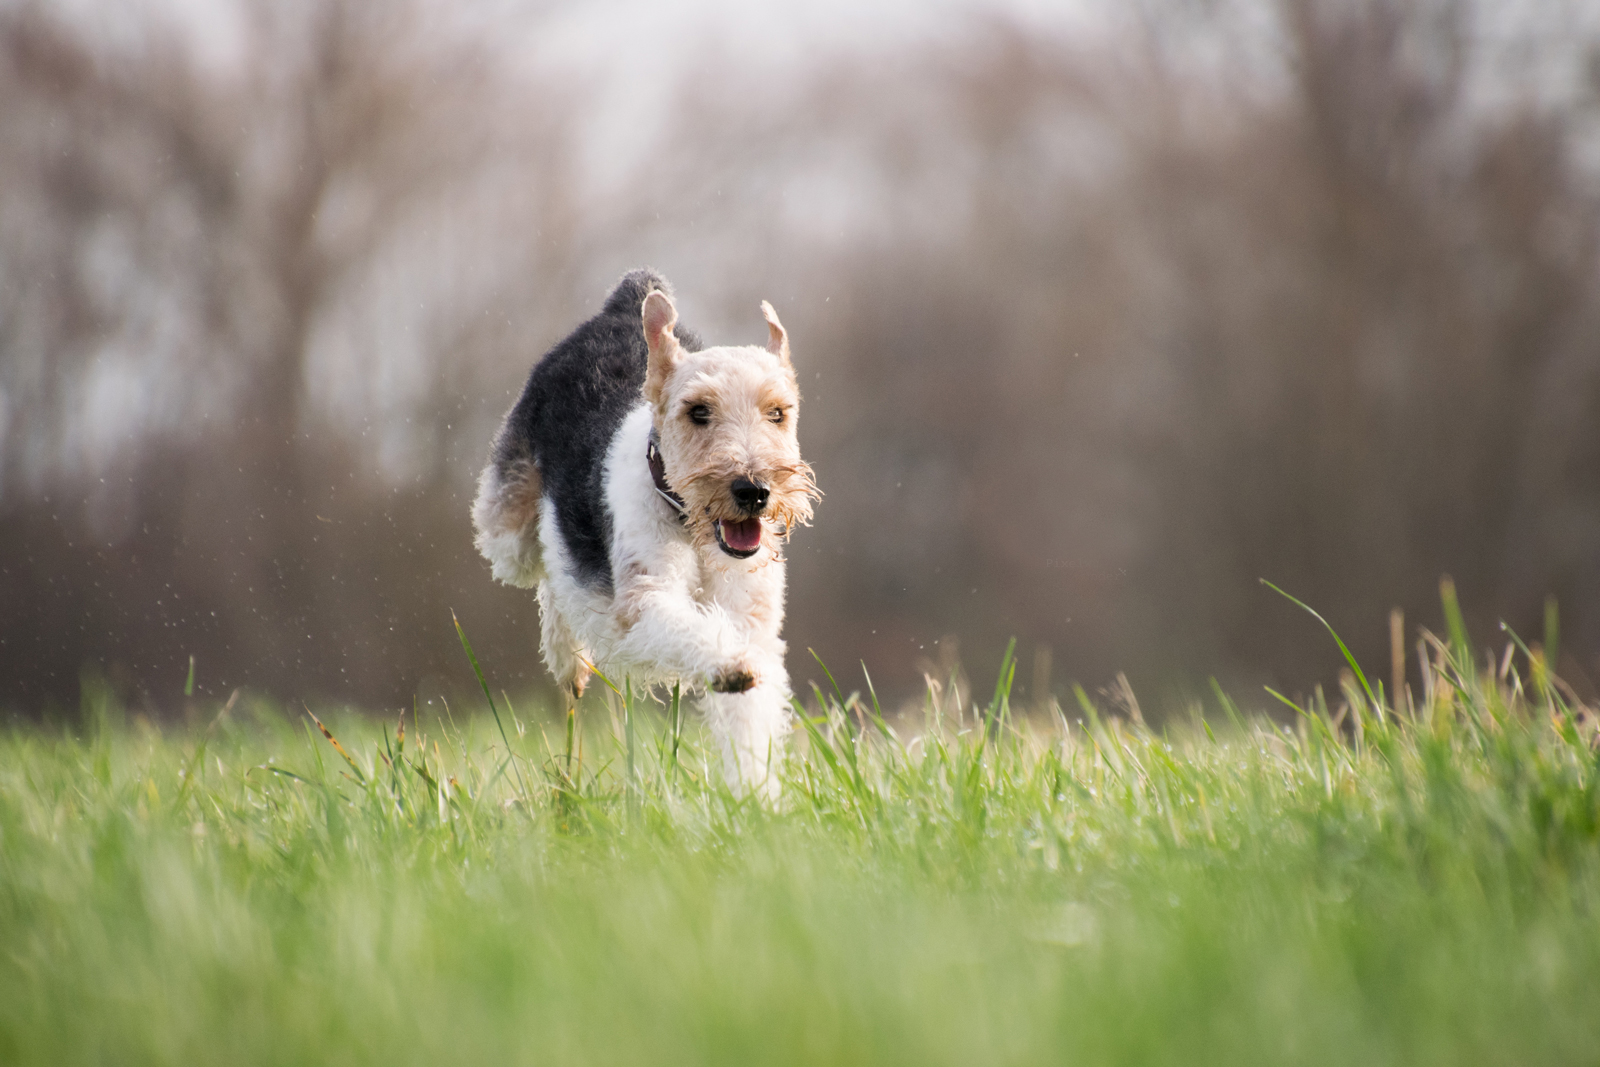 A dog running through a grassy field